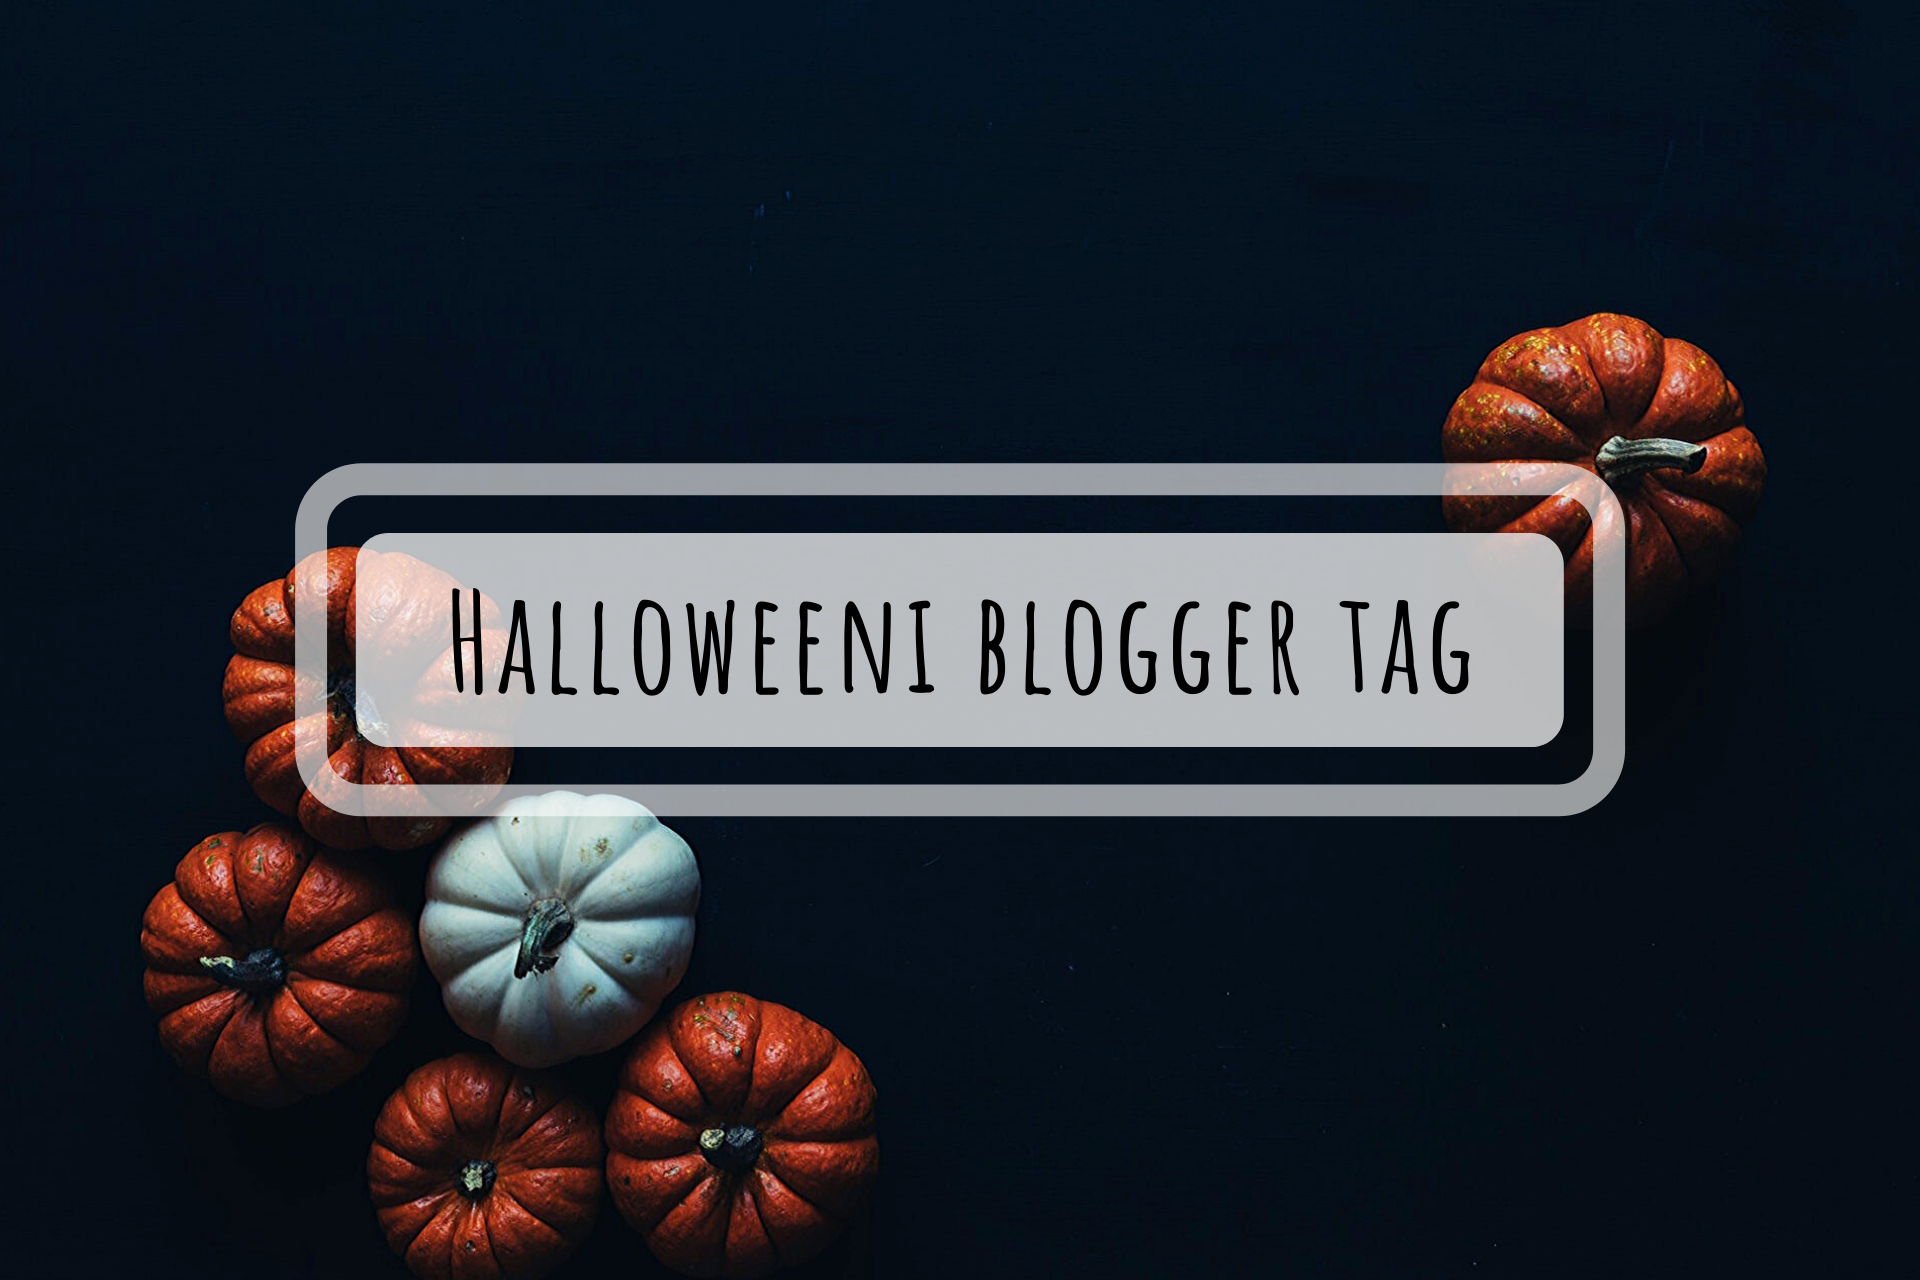 Halloweeni blogger tag